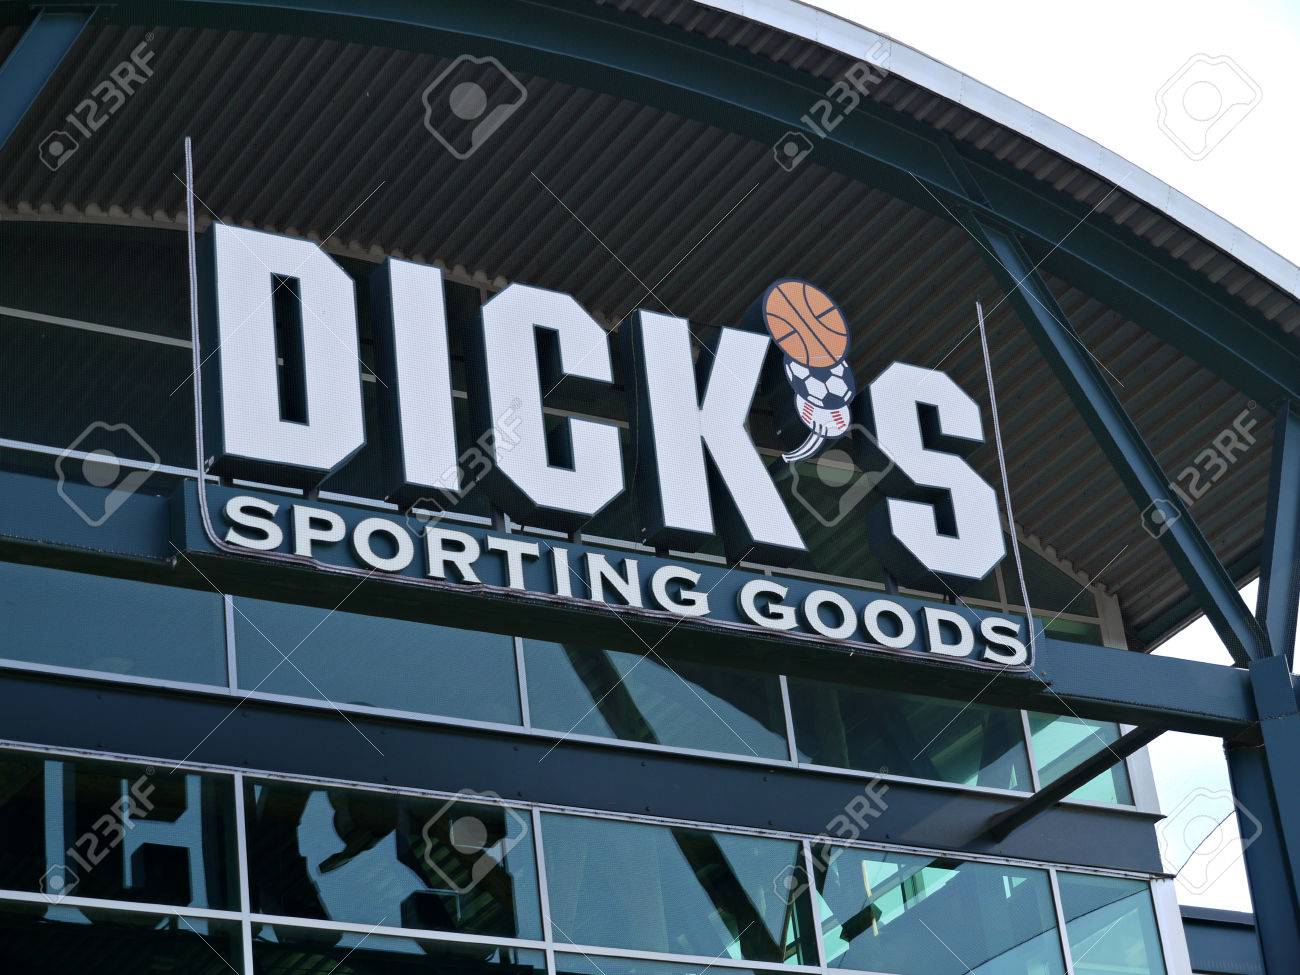 Slap H. reccomend Arlington and dicks sporting goods